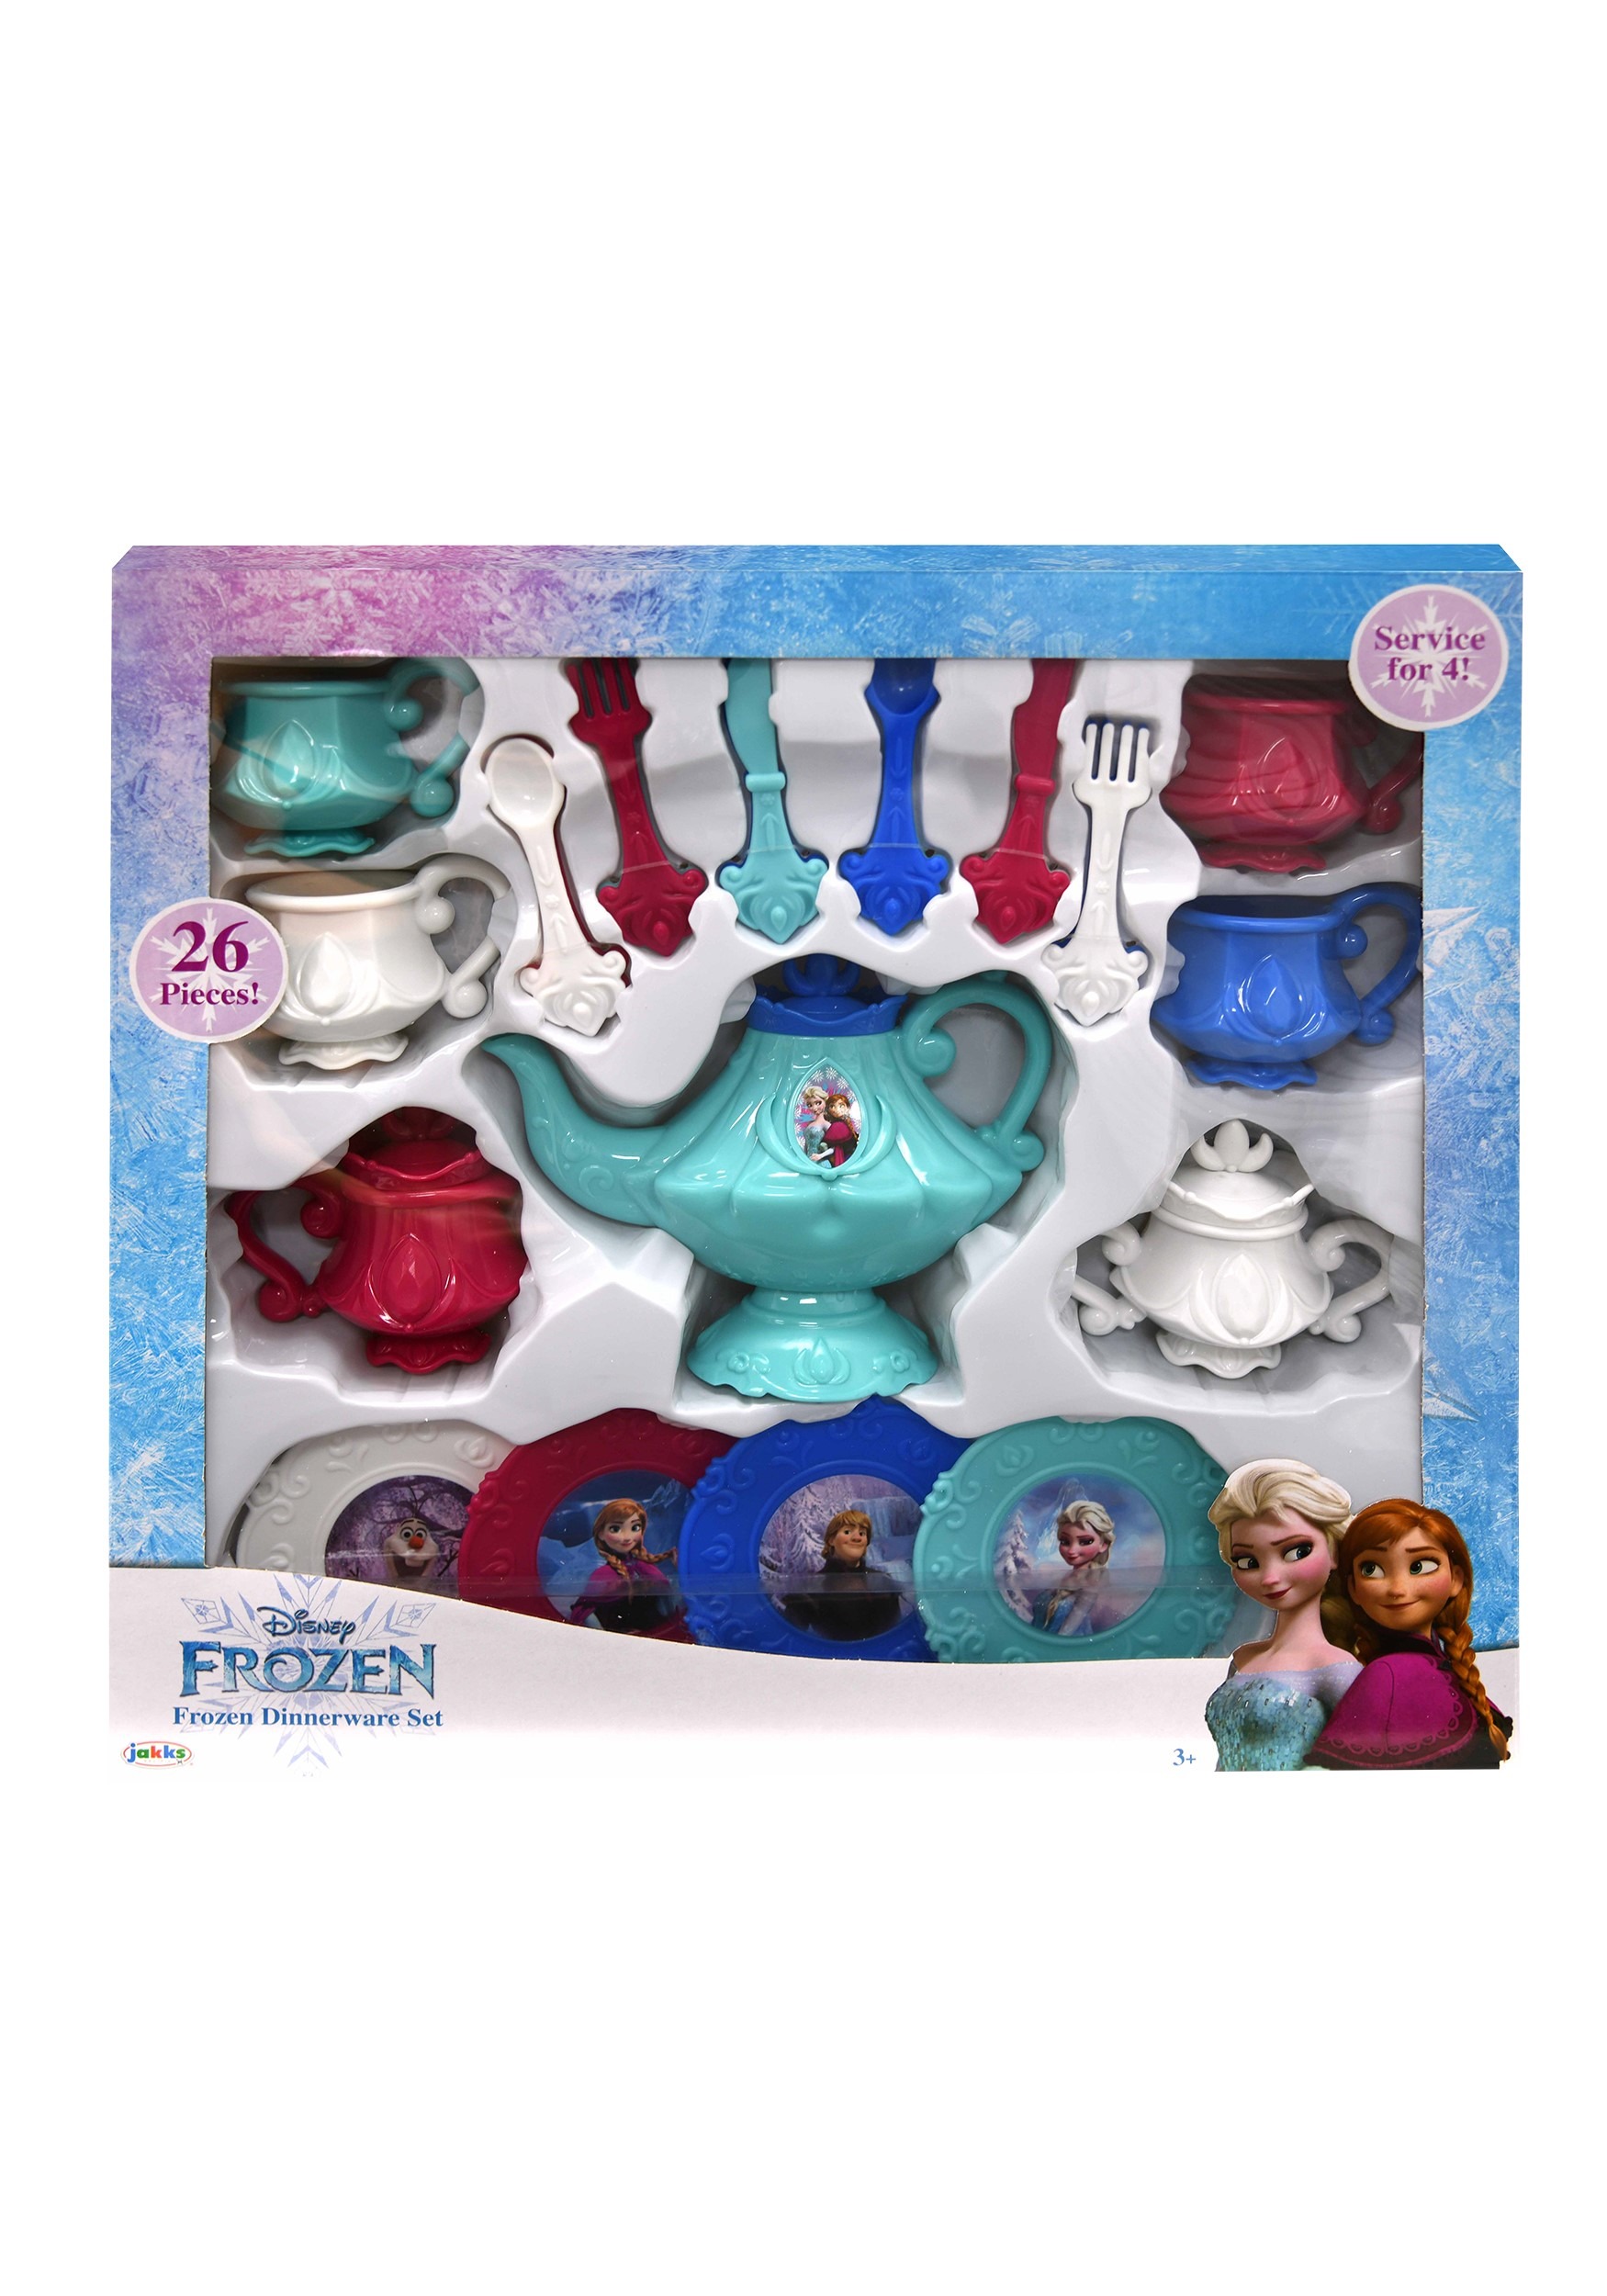 26 Piece Frozen Dinnerware Set